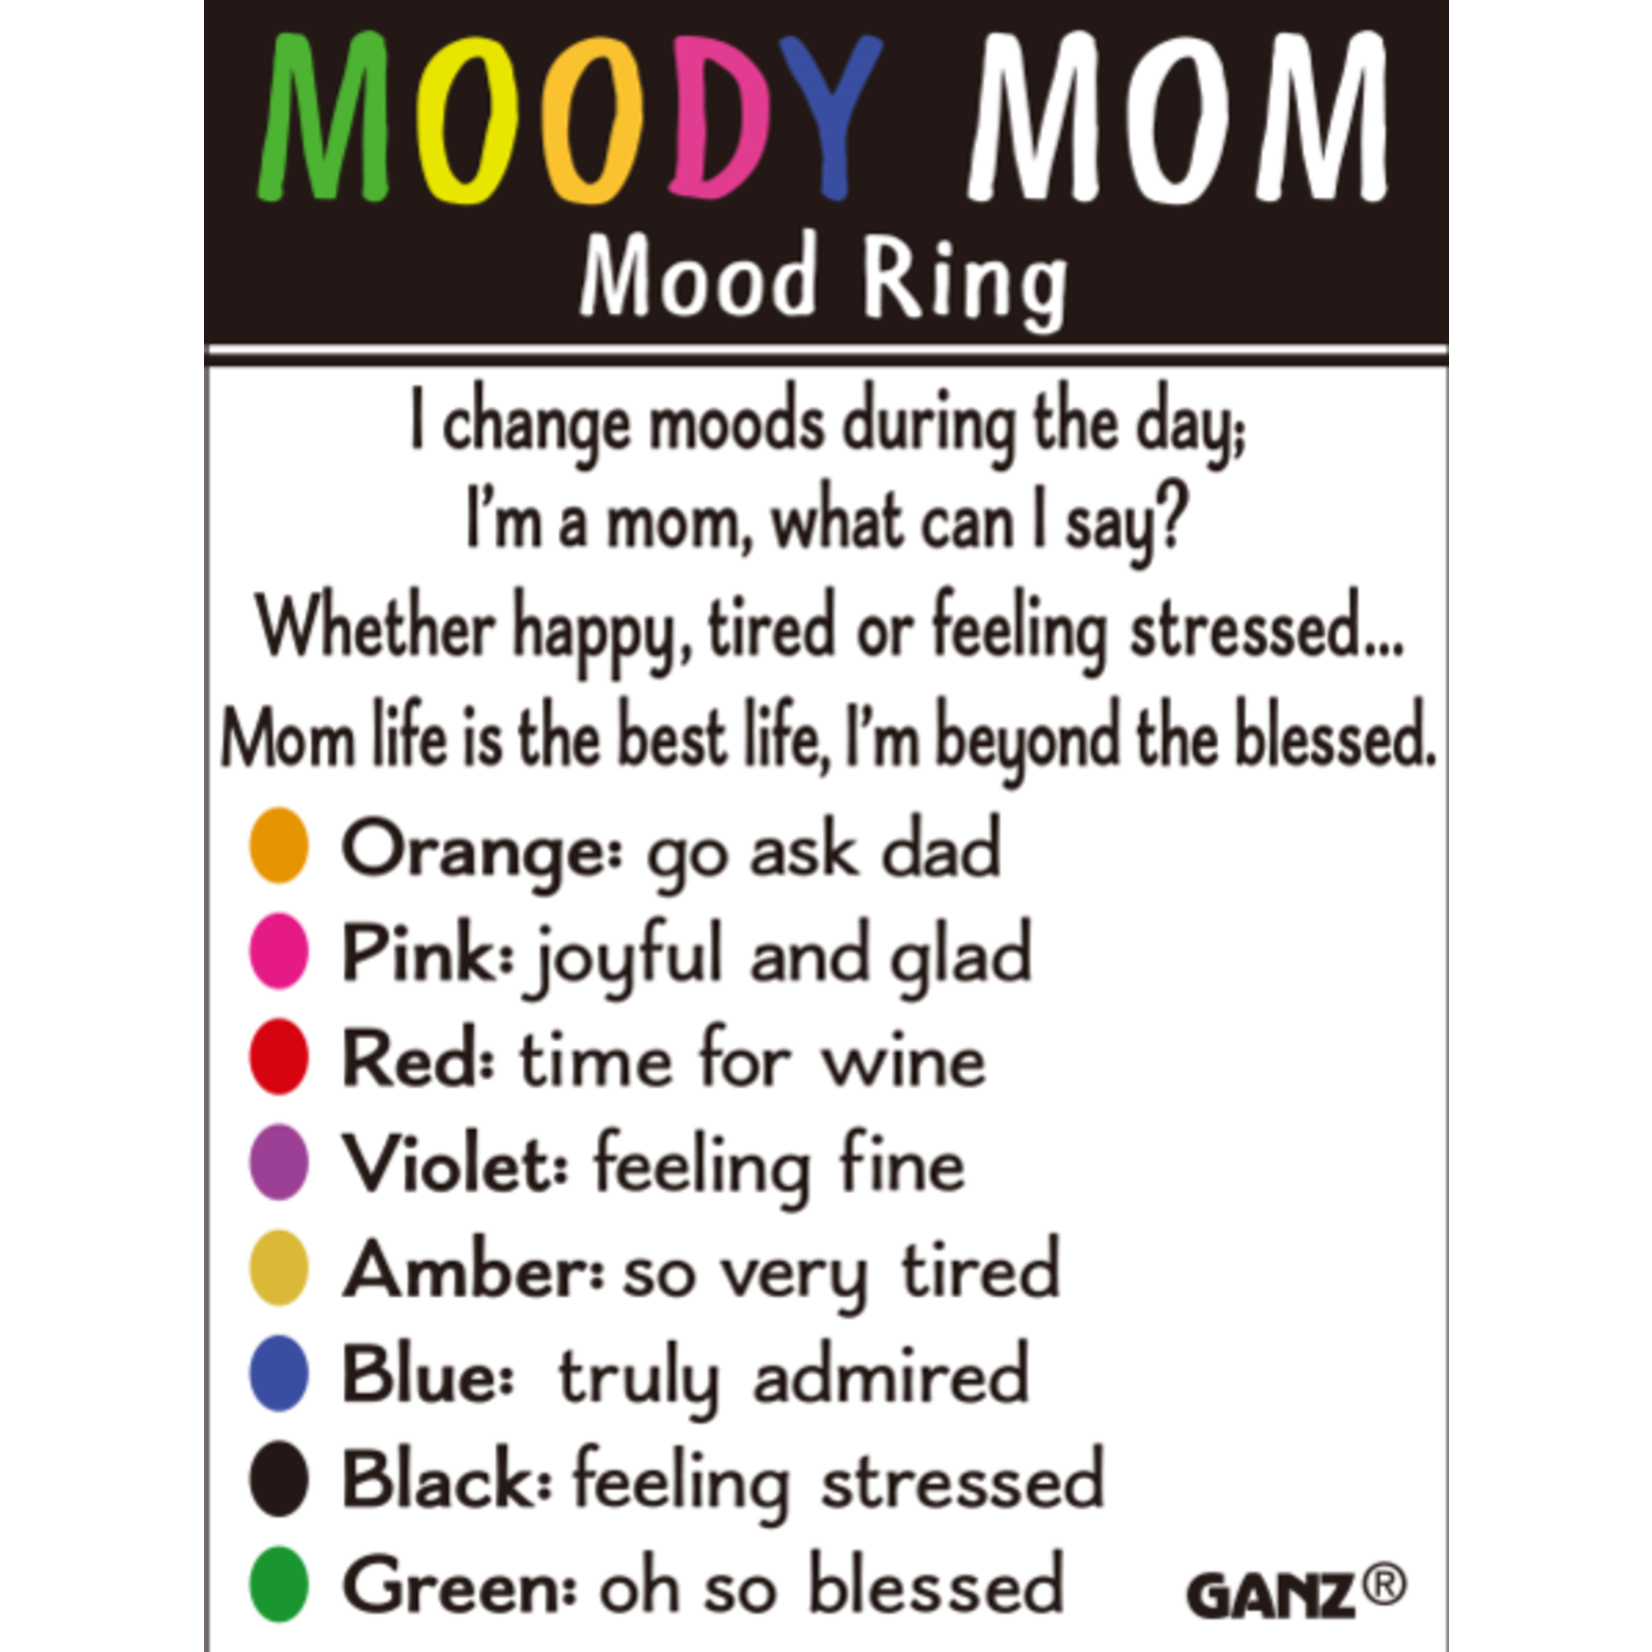 Moody Mom Mood Ring